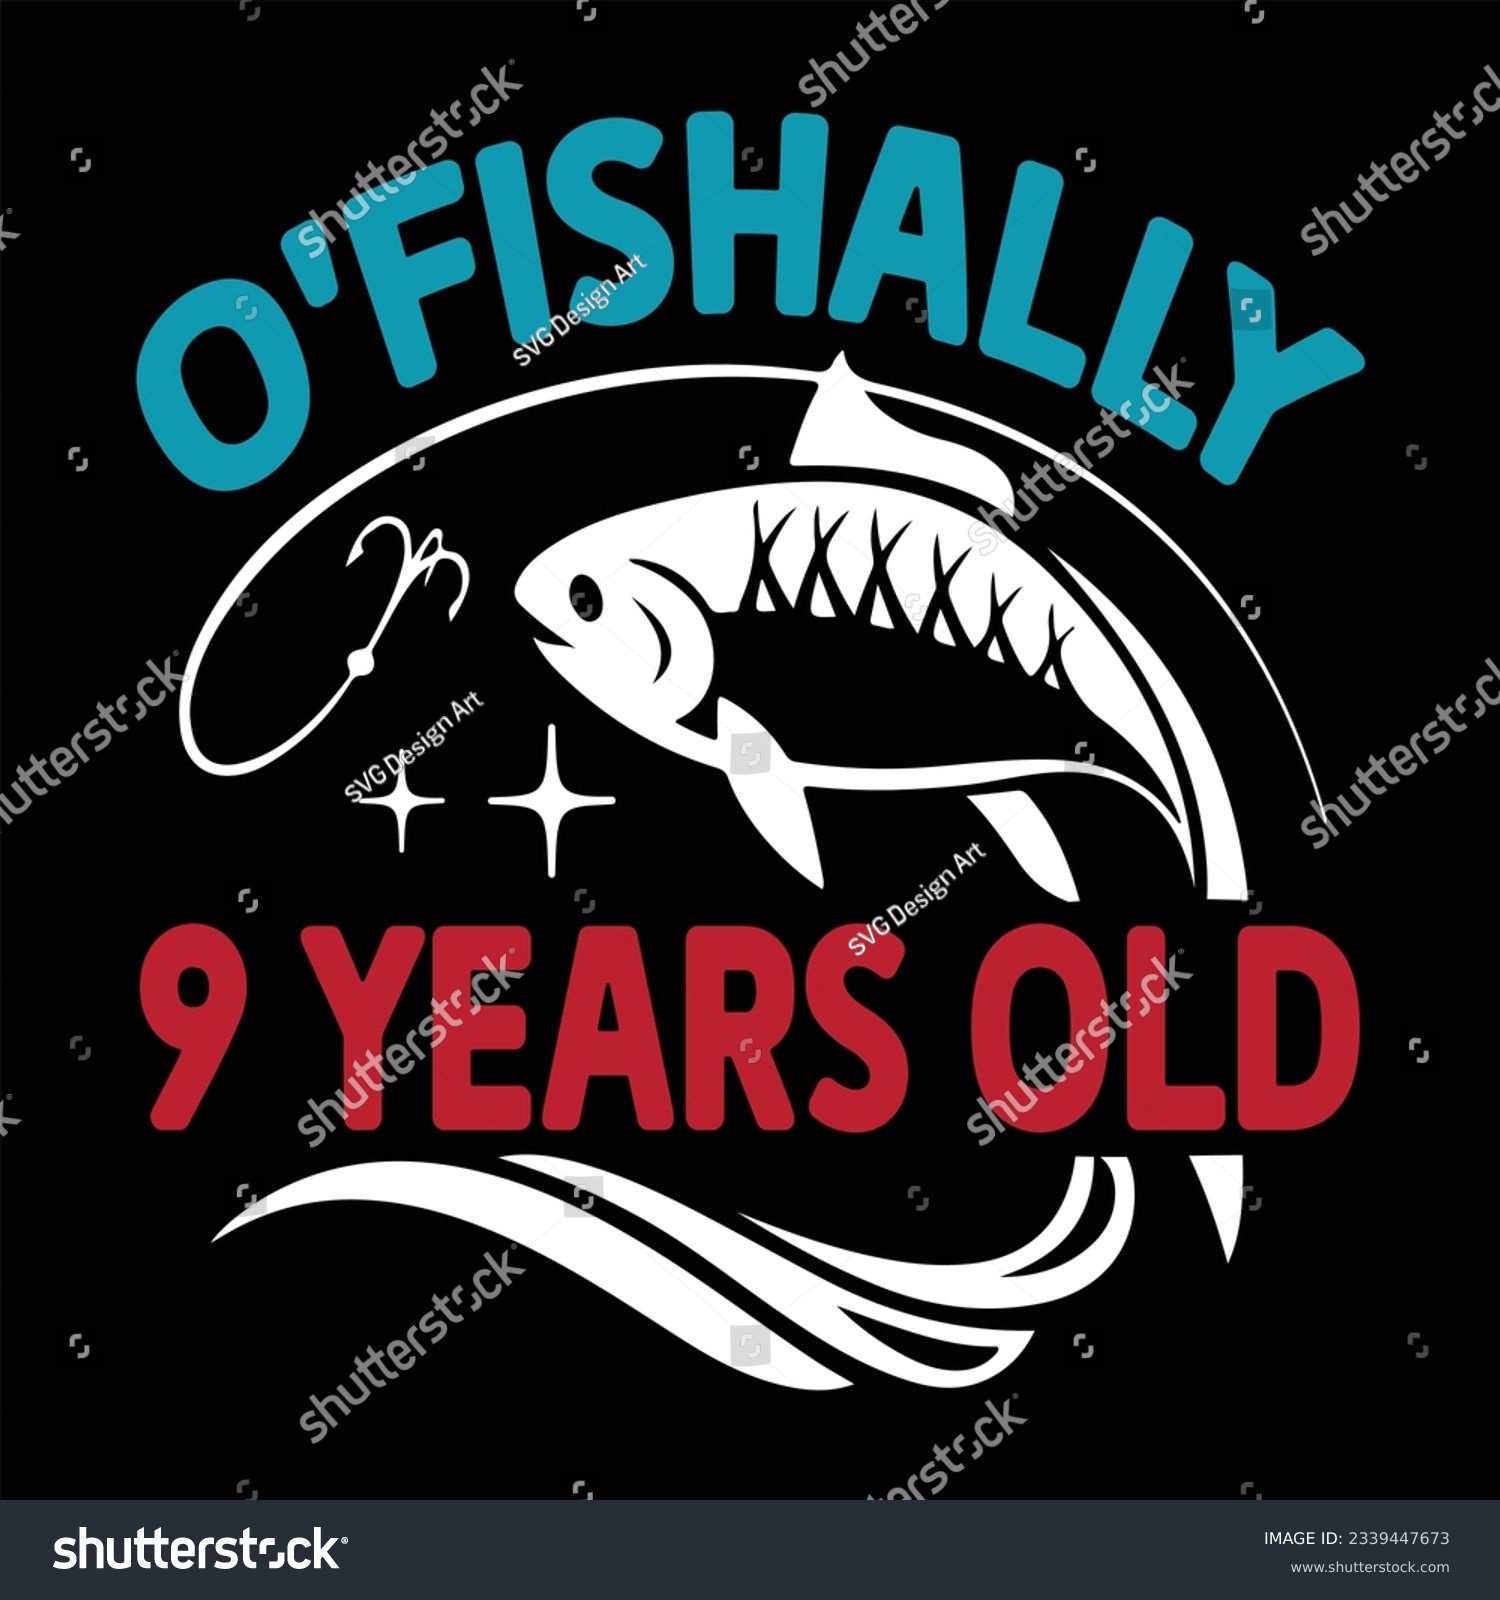 SVG of O'Fishally 9 Years Old Funny Birthday svg svg